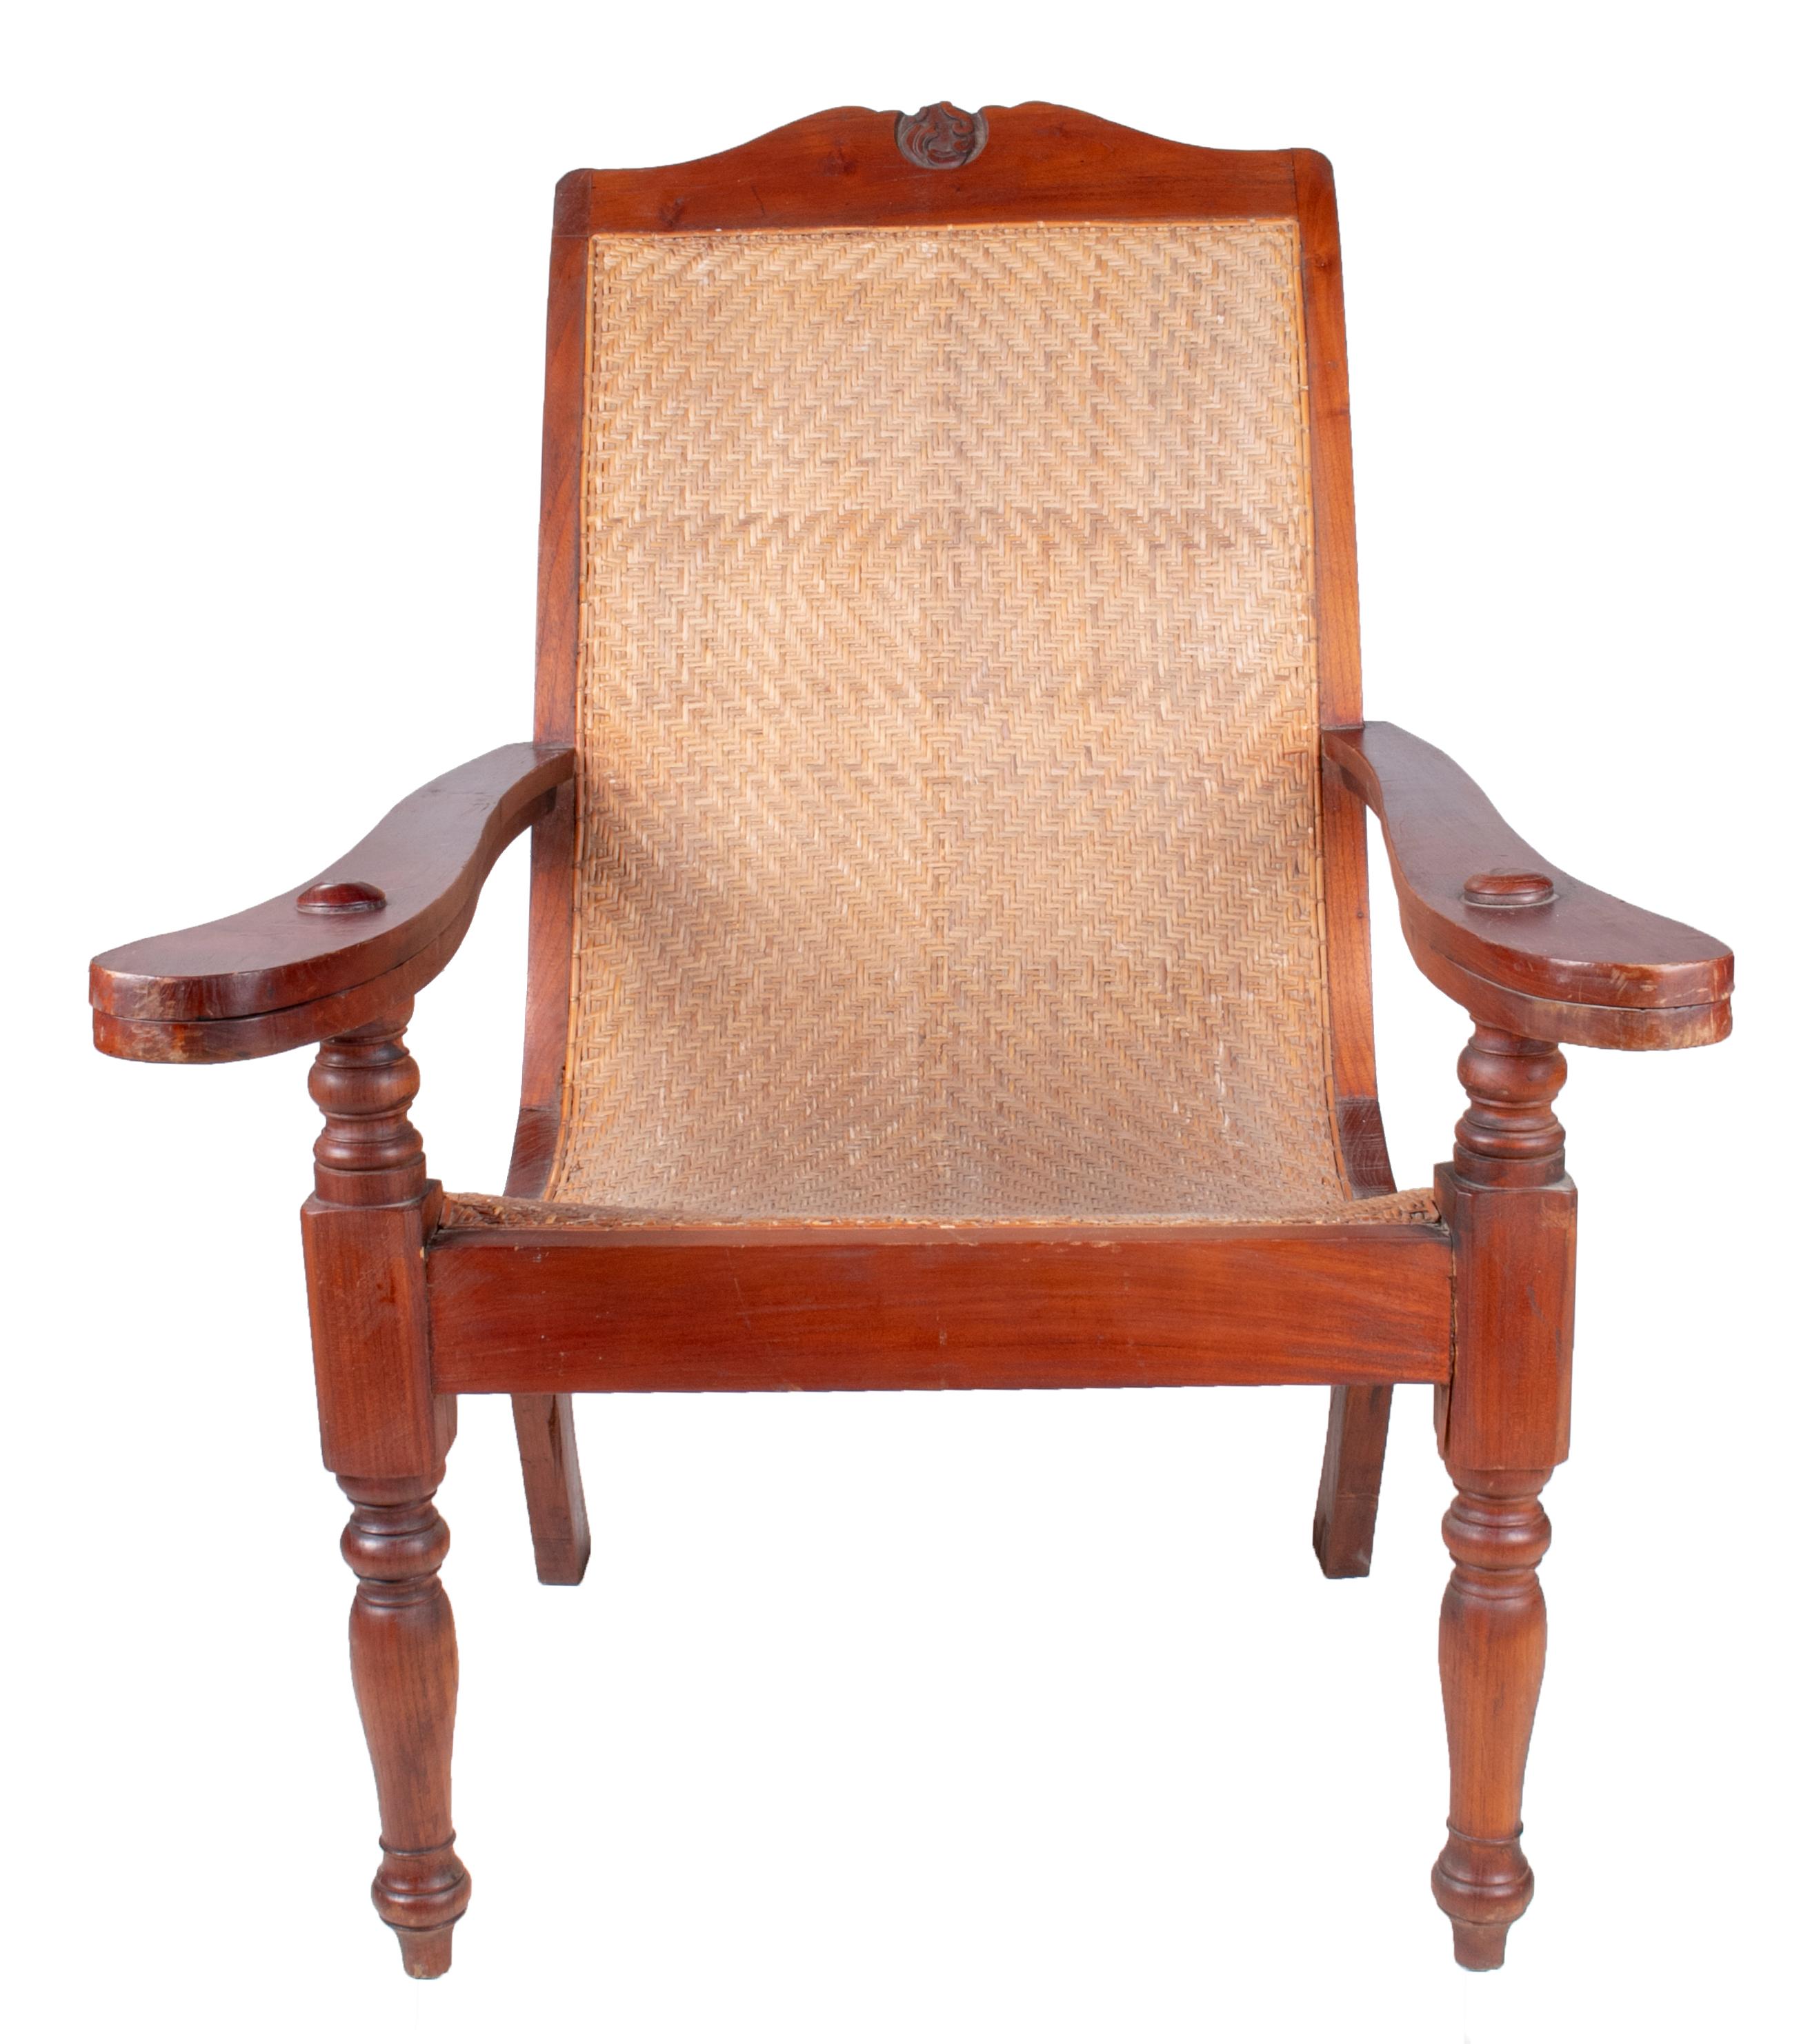 1990s European mahogany rattan lace cane armchair.